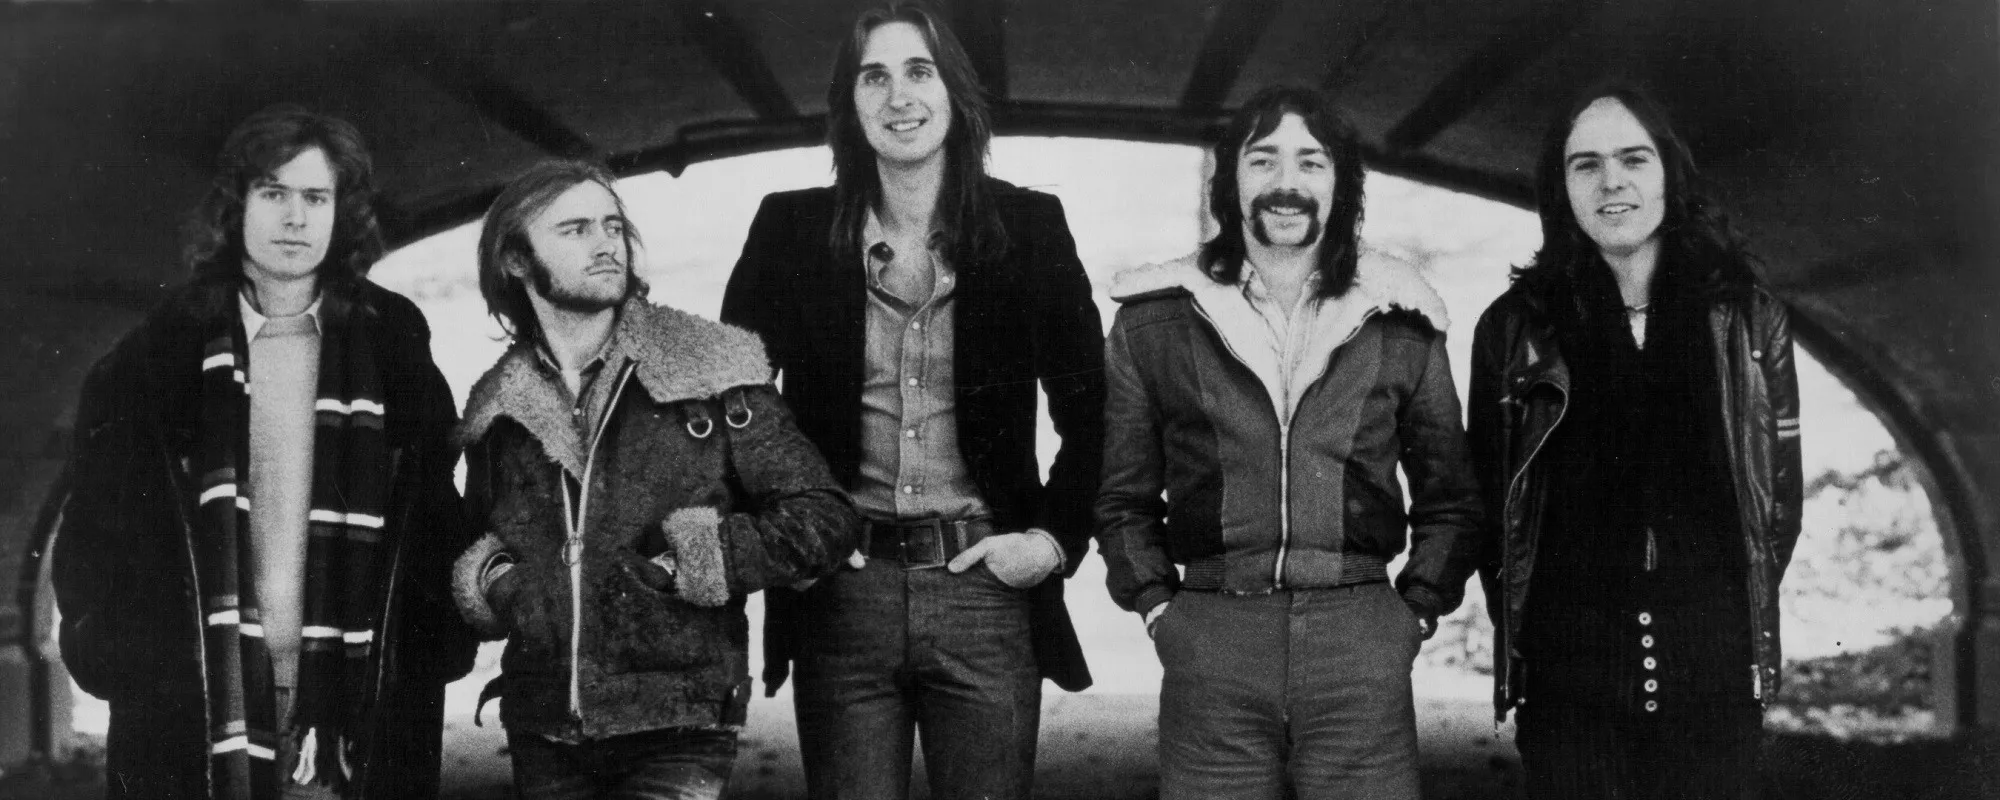 Ex-Genesis Guitarist Steve Hackett Recalls Band Members Were “at Loggerheads” Before Peter Gabriel’s Exit from Group